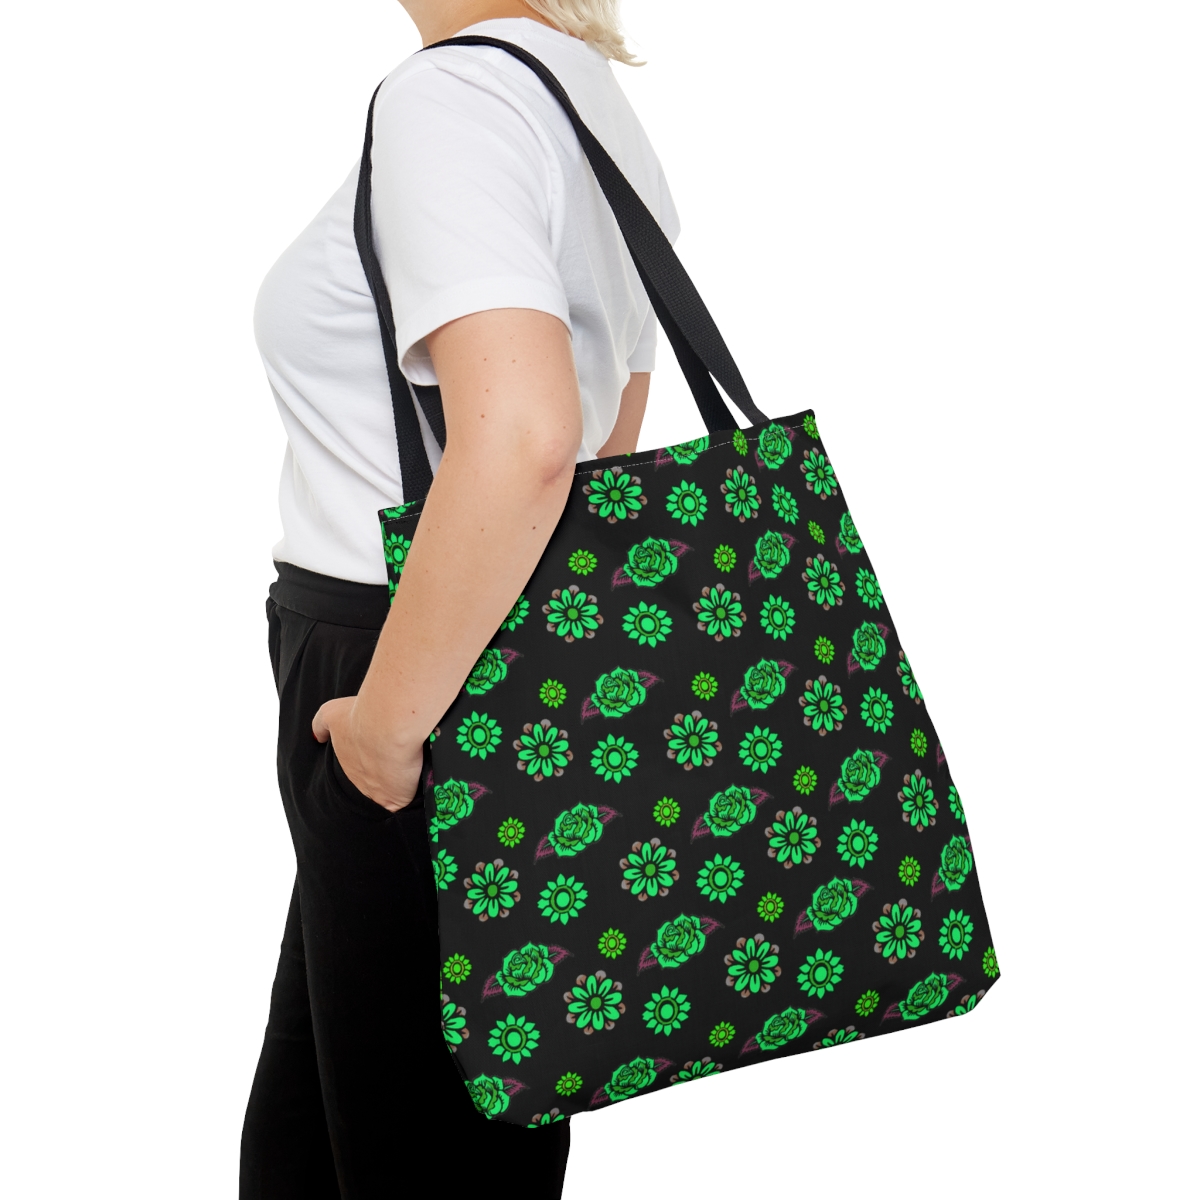 "Sugar Skull Flowers" Tote Bag (Green & Black) product thumbnail image